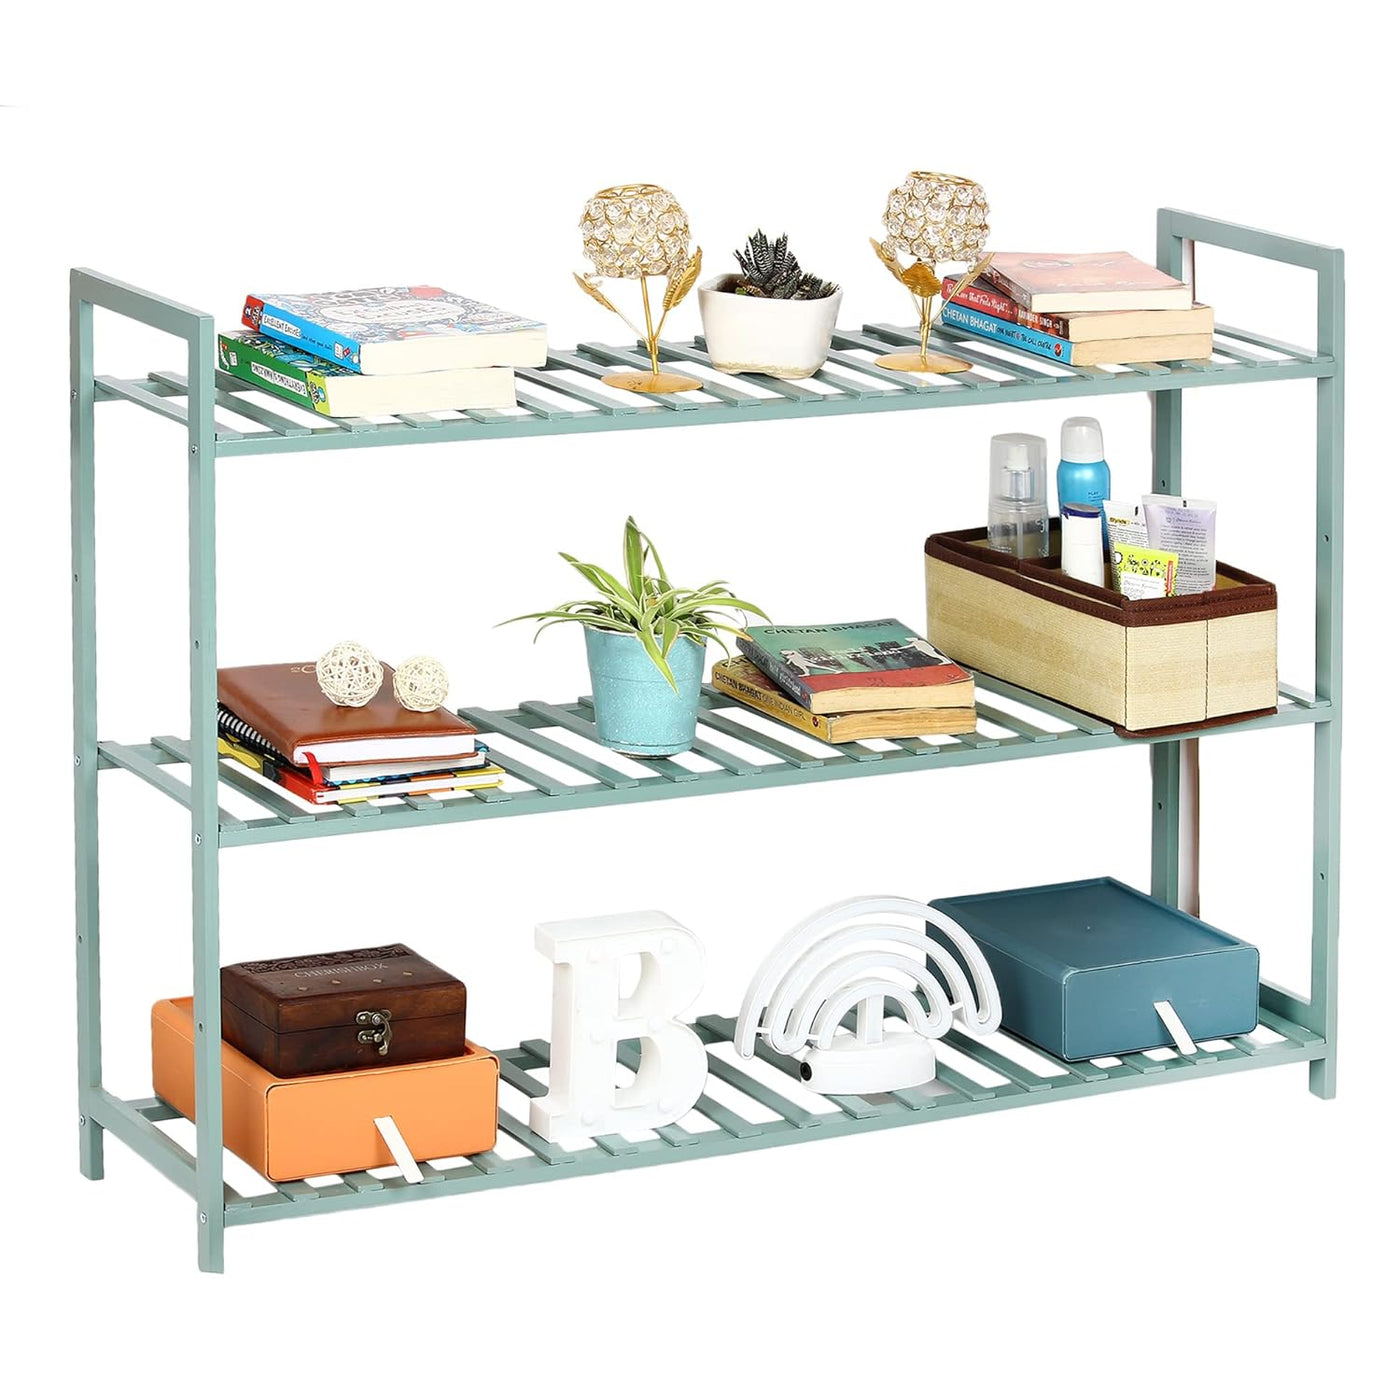 3 Tier Adjustable Bookshelf, Bamboo Bookcase Shelf Storage Organizer - (Green, 98x24x70cm)